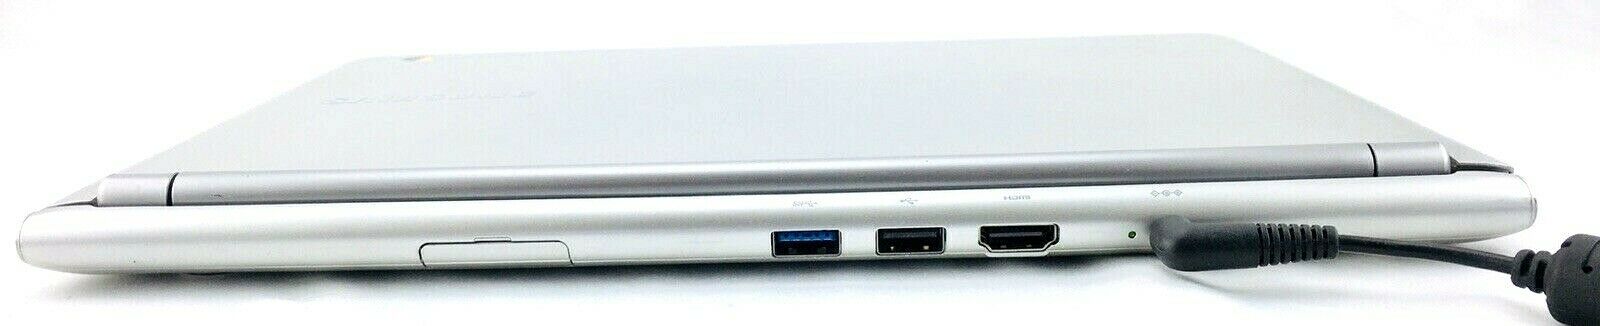 Silver Samsung Chromebook 303A SSD Webcam, HDMI USB 3.0 for Google Classroom